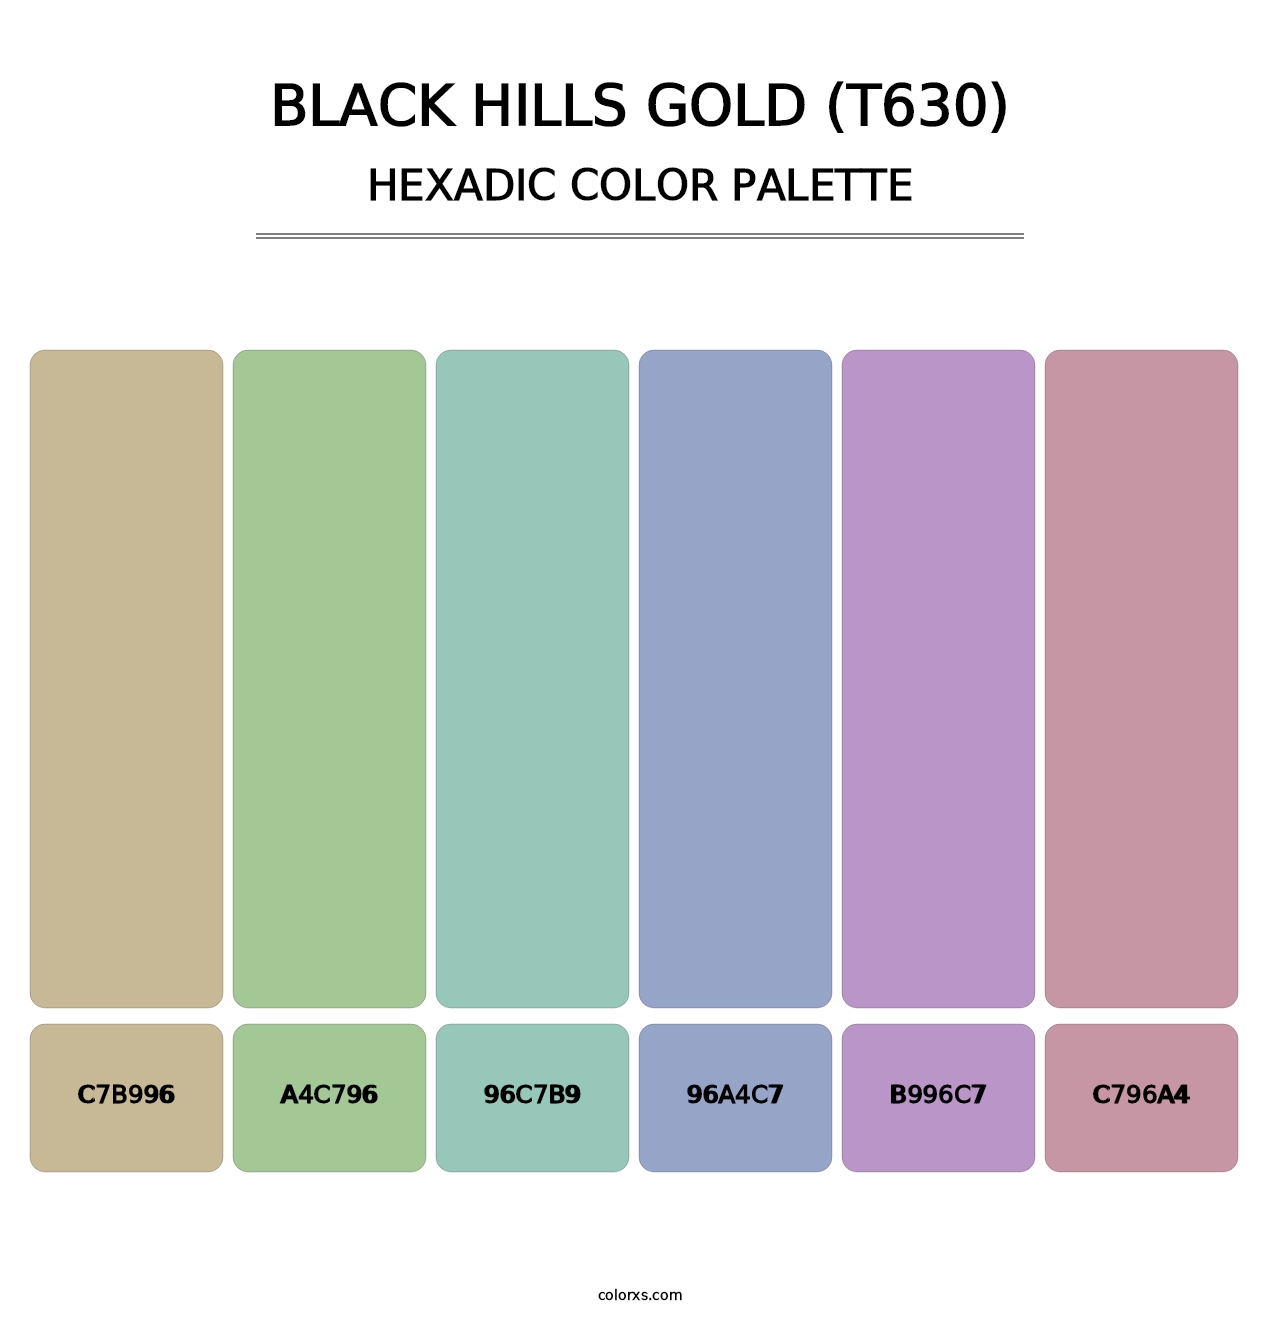 Black Hills Gold (T630) - Hexadic Color Palette